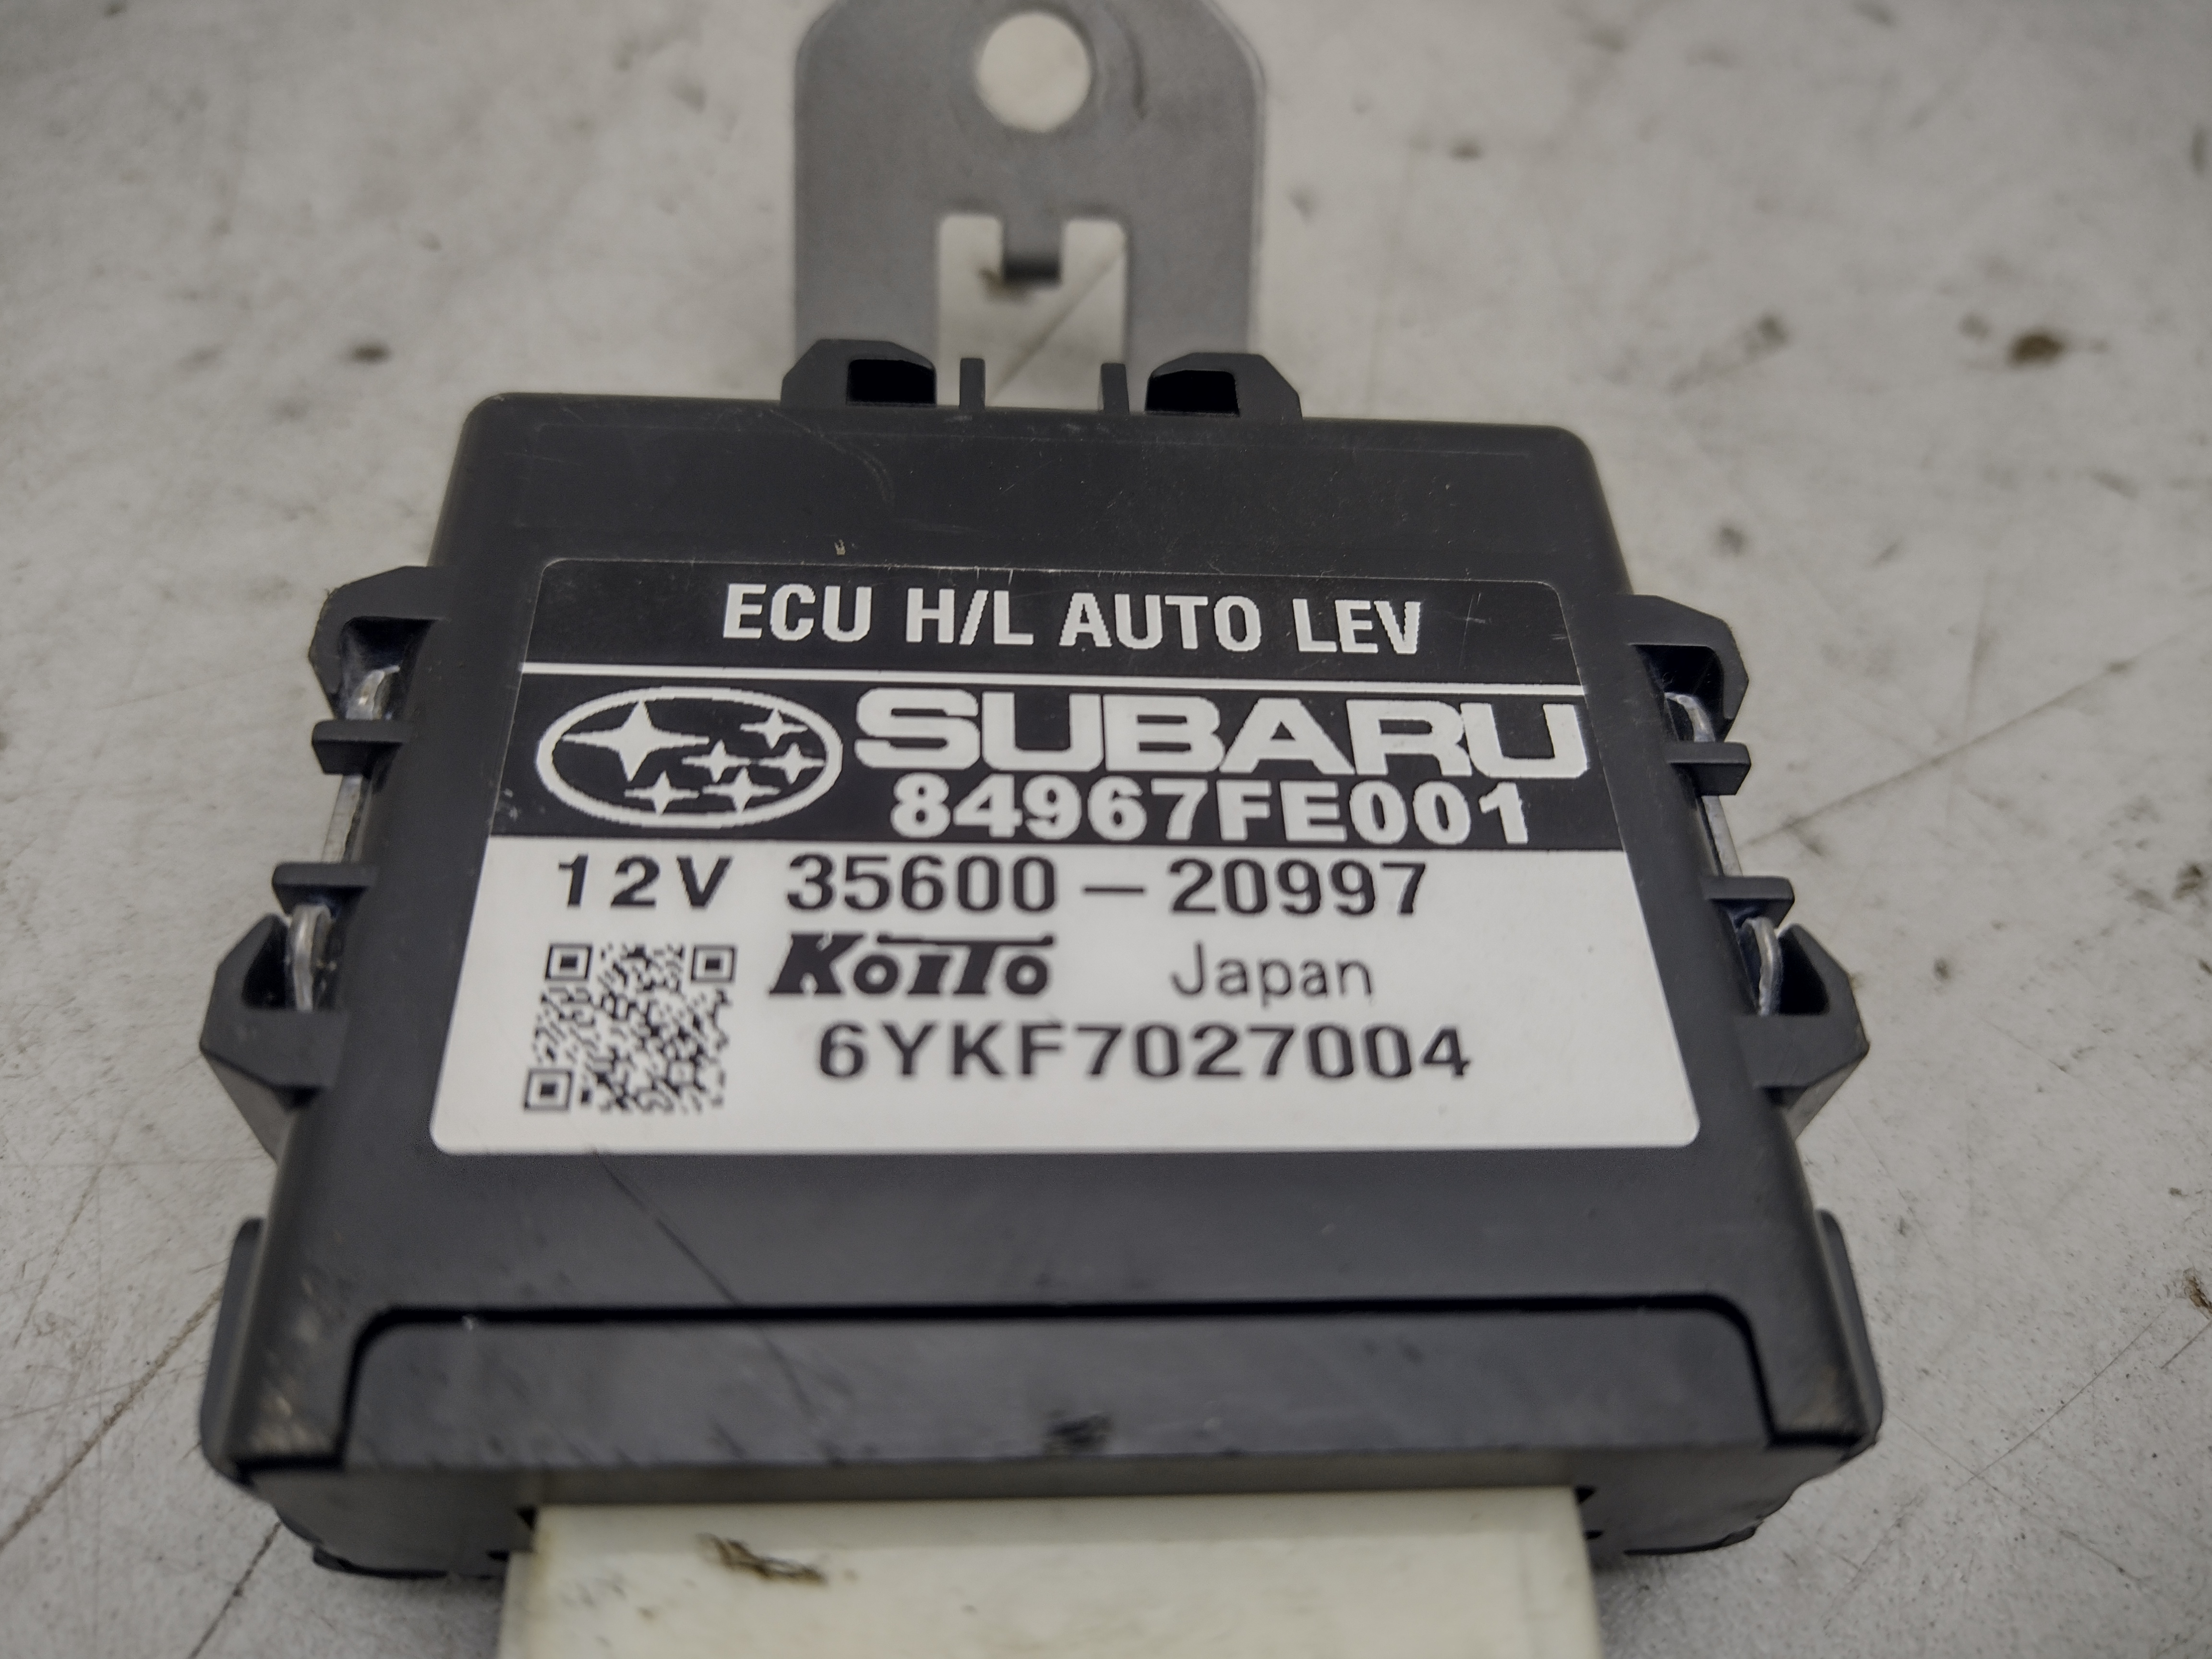 ECU H L AUTO LEV 84967FE001 für Subaru Impreza 2.0 R GD GG